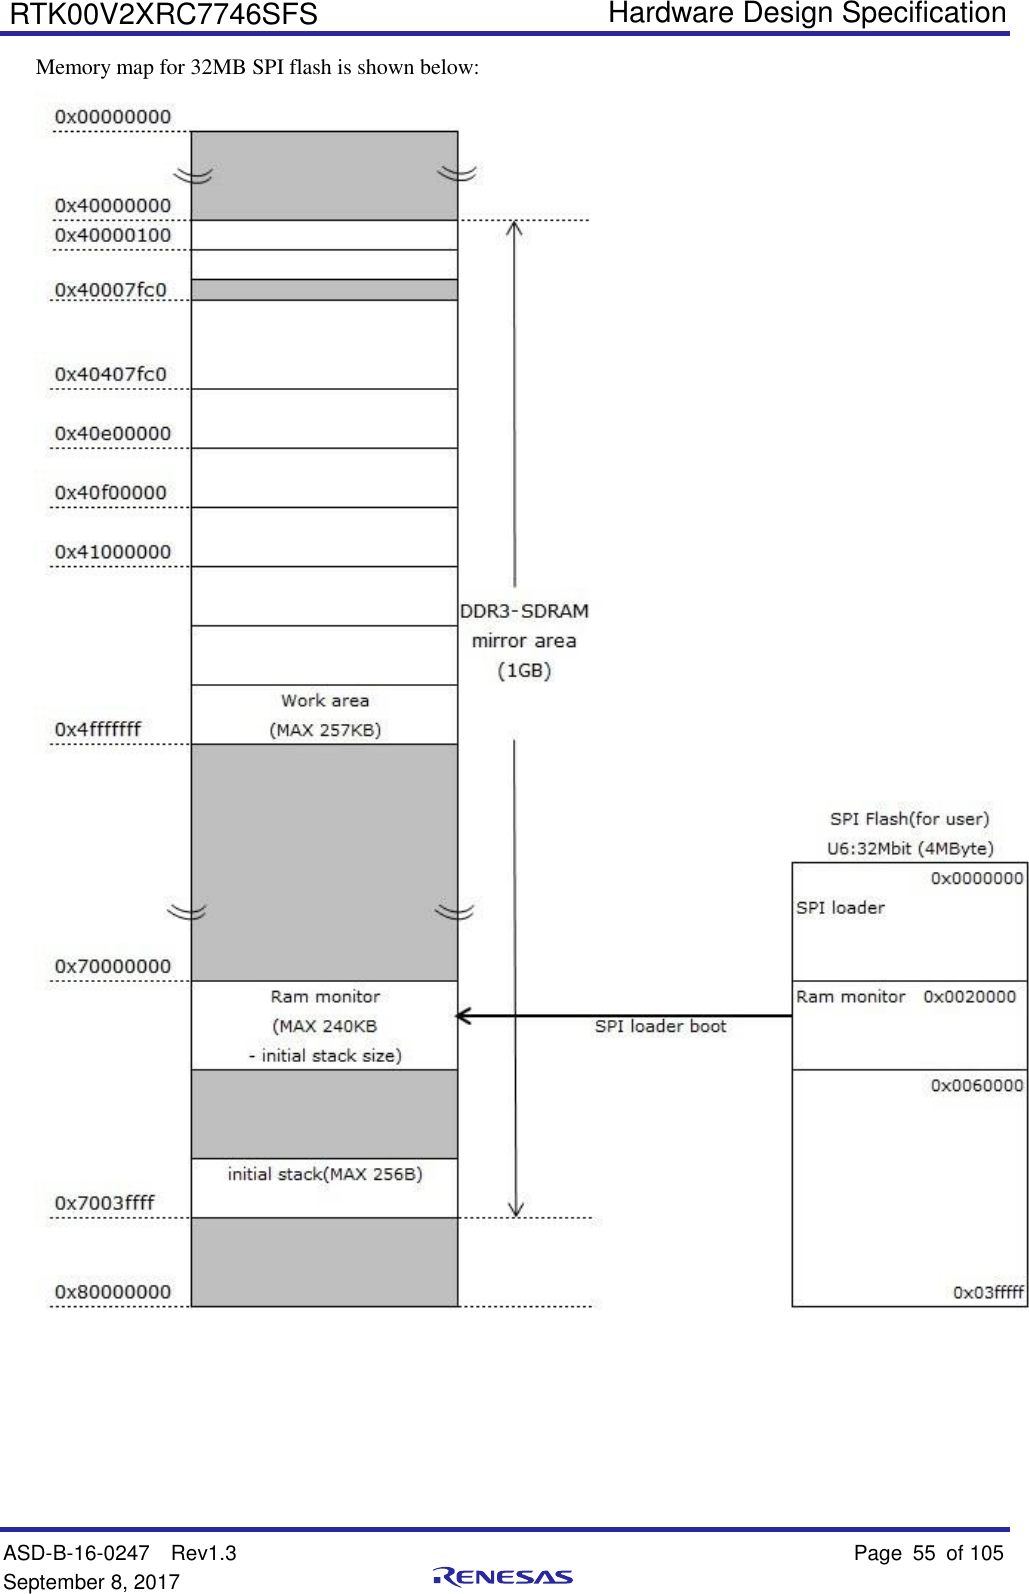   Hardware Design Specification ASD-B-16-0247  Rev1.3    Page 55  of 105 September 8, 2017      RTK00V2XRC7746SFS Memory map for 32MB SPI flash is shown below:       